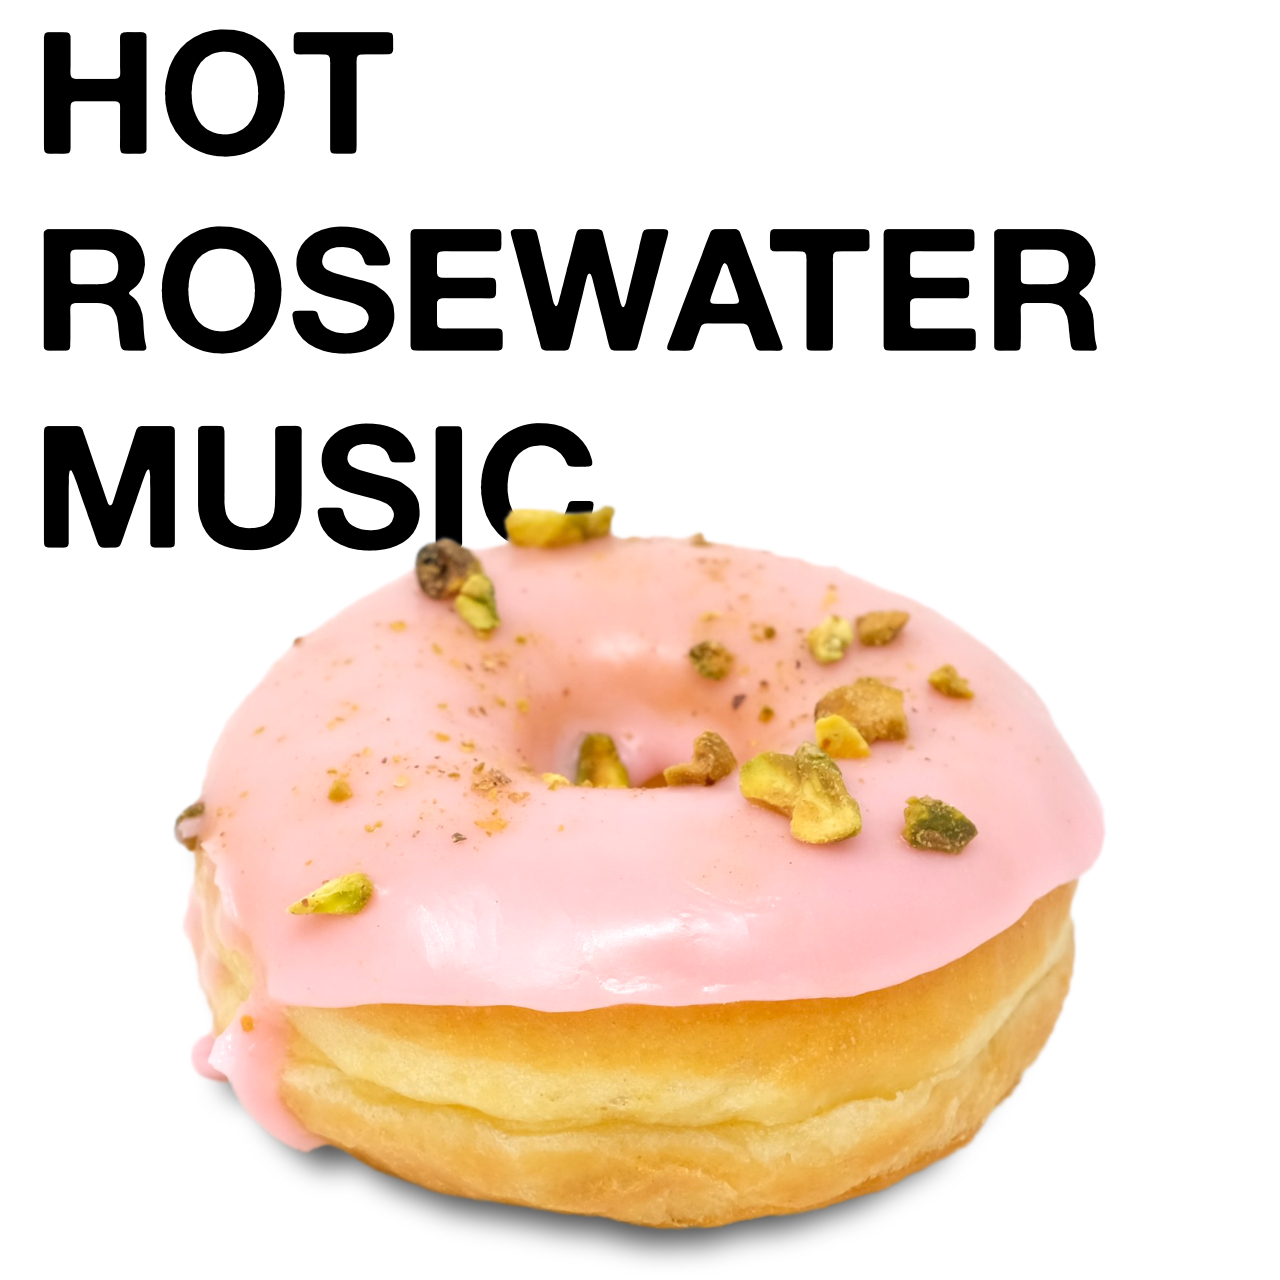 Hot Rosewater Music